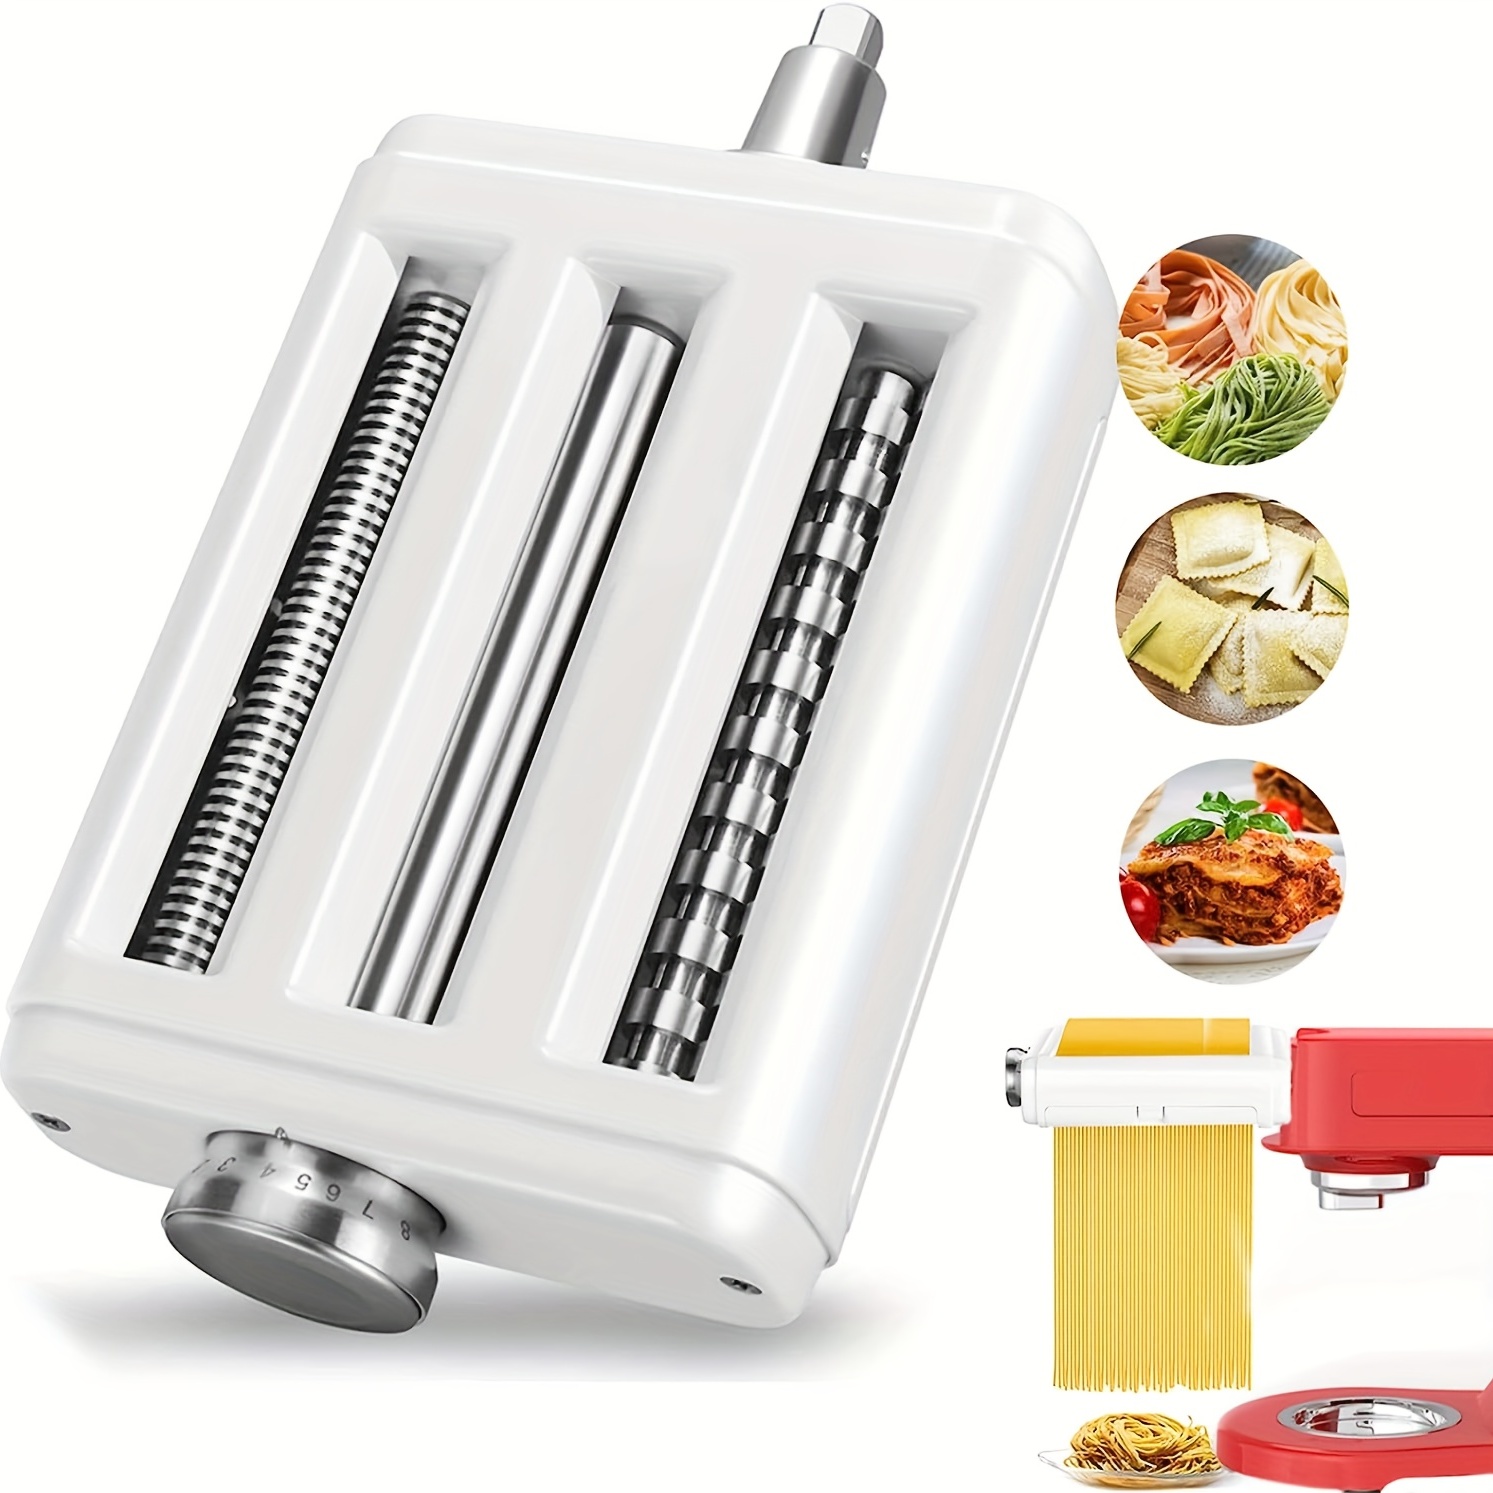 Pasta Maker Attachment For Kitchenaid Stand Mixers Included Pasta Sheet  Roller, Spaghetti Cutter, Fettuccine Cutter Maker Accessories - Temu